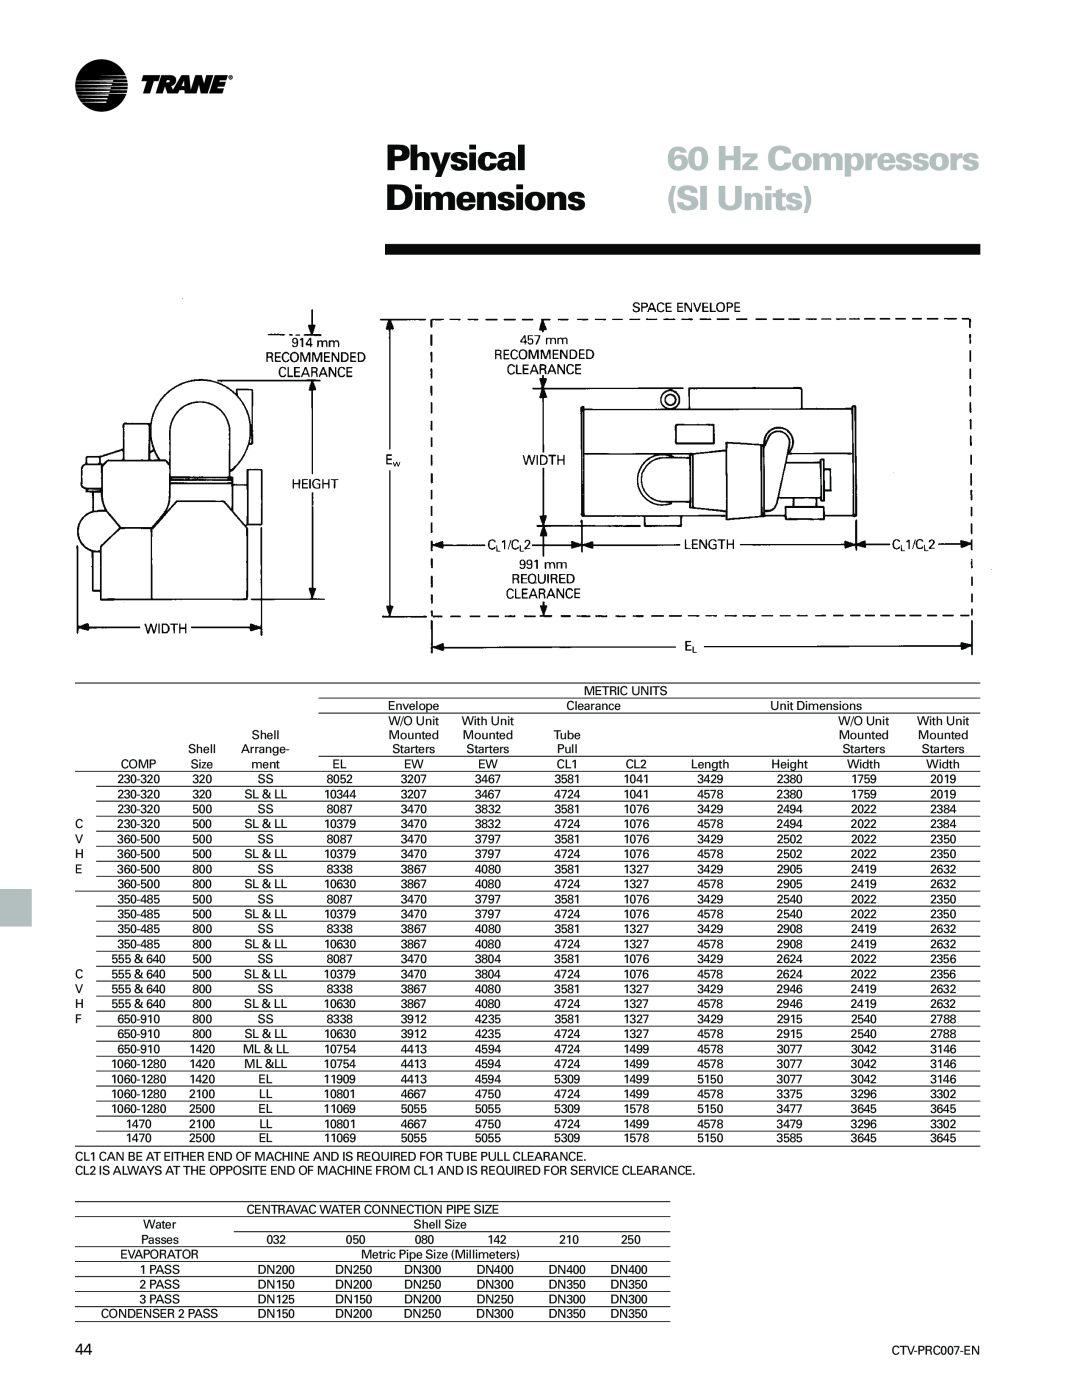 Trane ctv-prc007-en manual Physical, Dimensions, Hz Compressors, SI Units, Envelope 